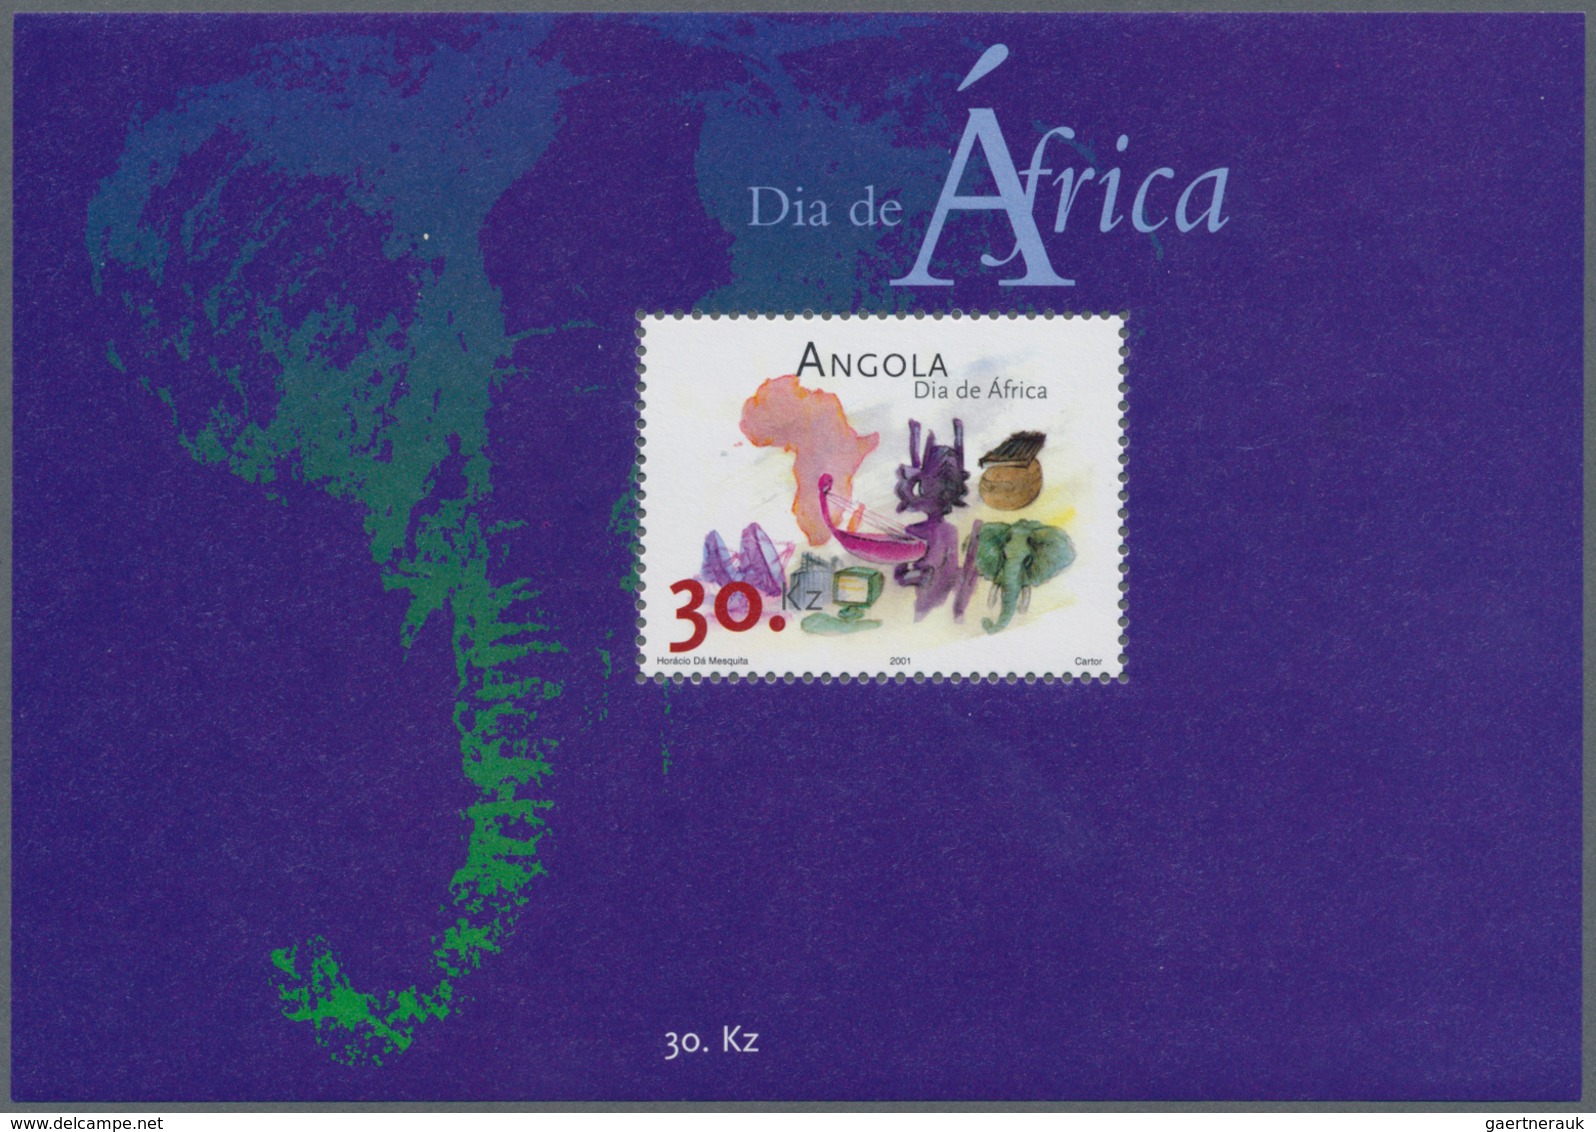 Angola: 2001, AFRICA DAY, Investment Lot Of 500 Souvenir Sheets MNH (Mi.no. Bl. 93; Cat. Val. 3000,- - Angola